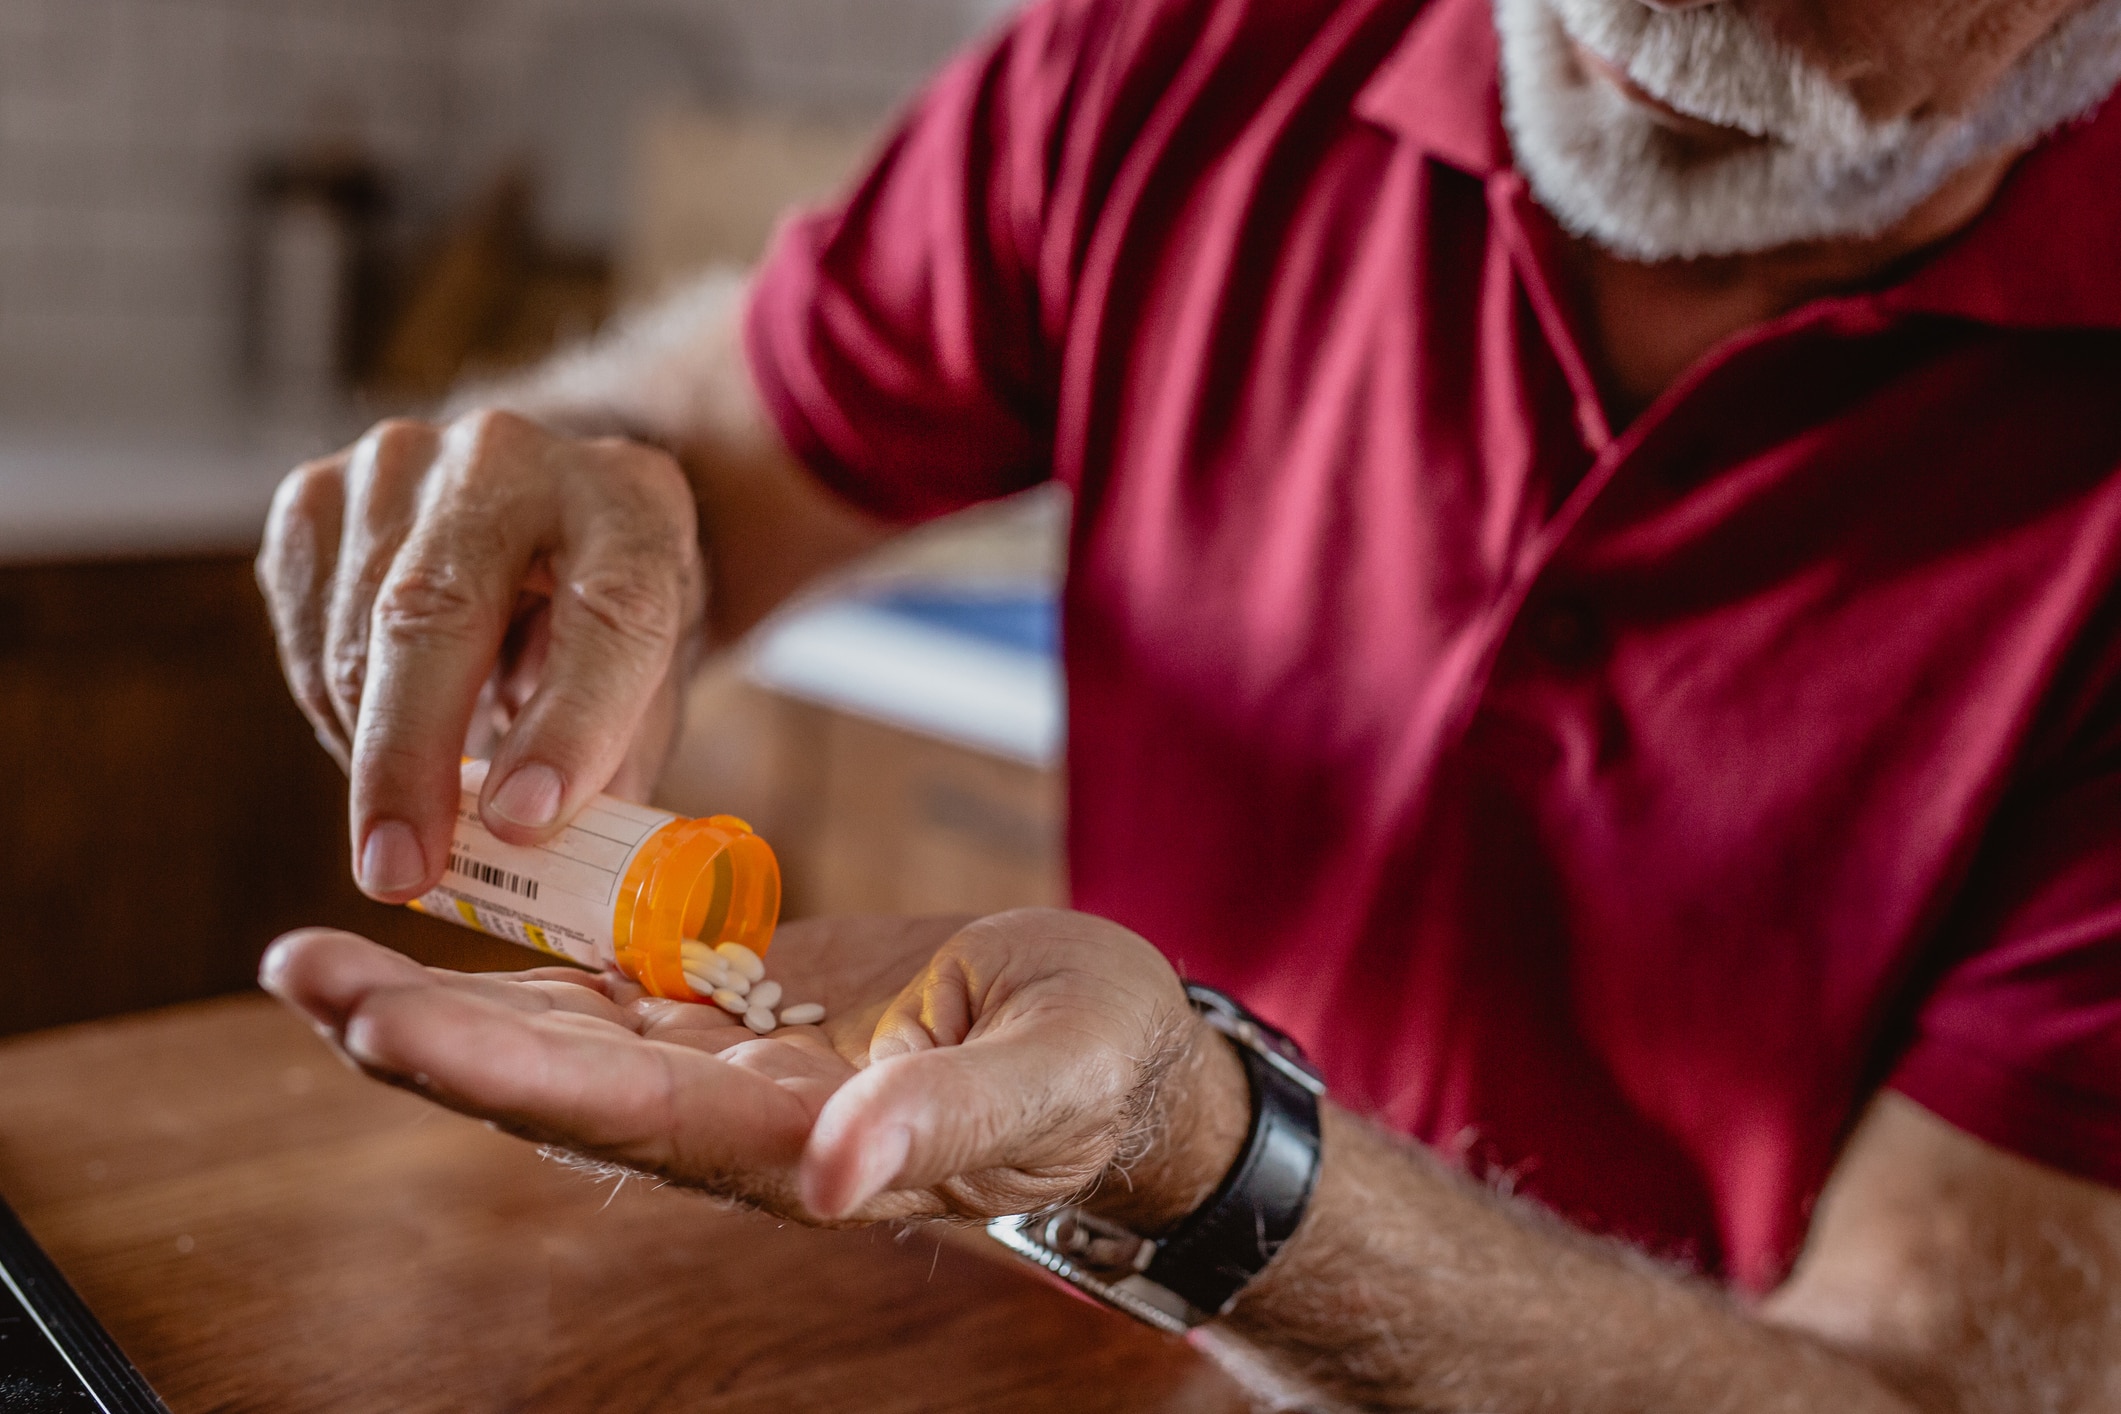 Older man taking prescription medications and in need of medication management tips for older adults